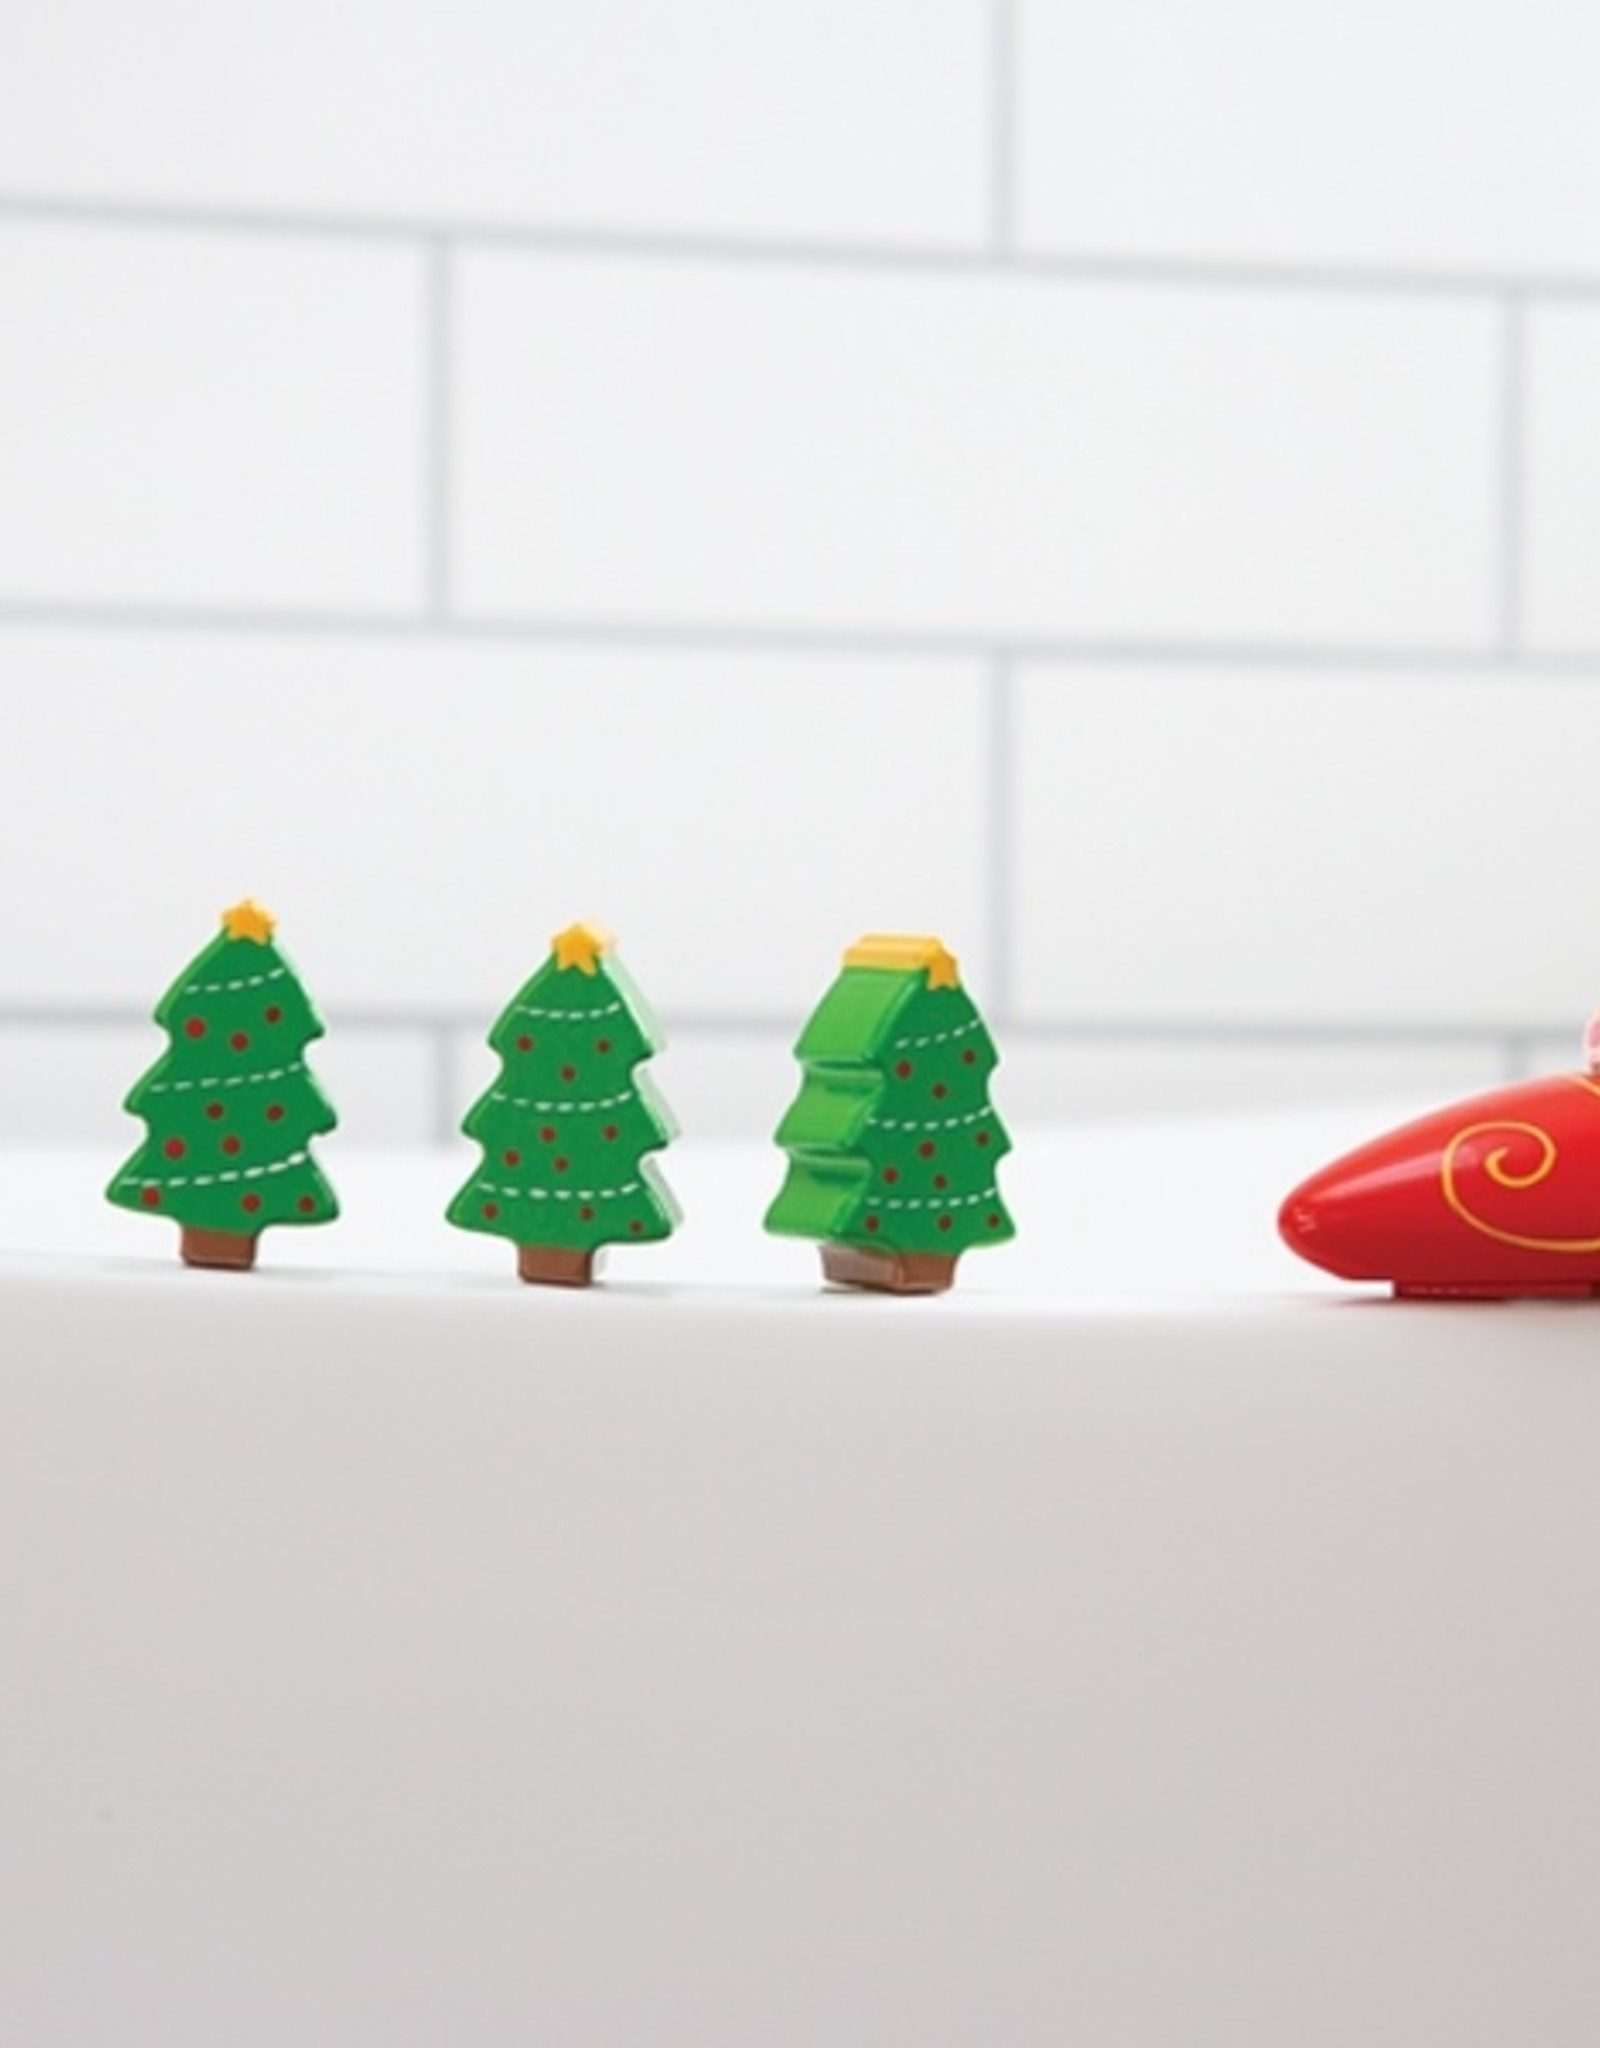 Jack Rabbit Creations Santa & Tree Bowling Toy